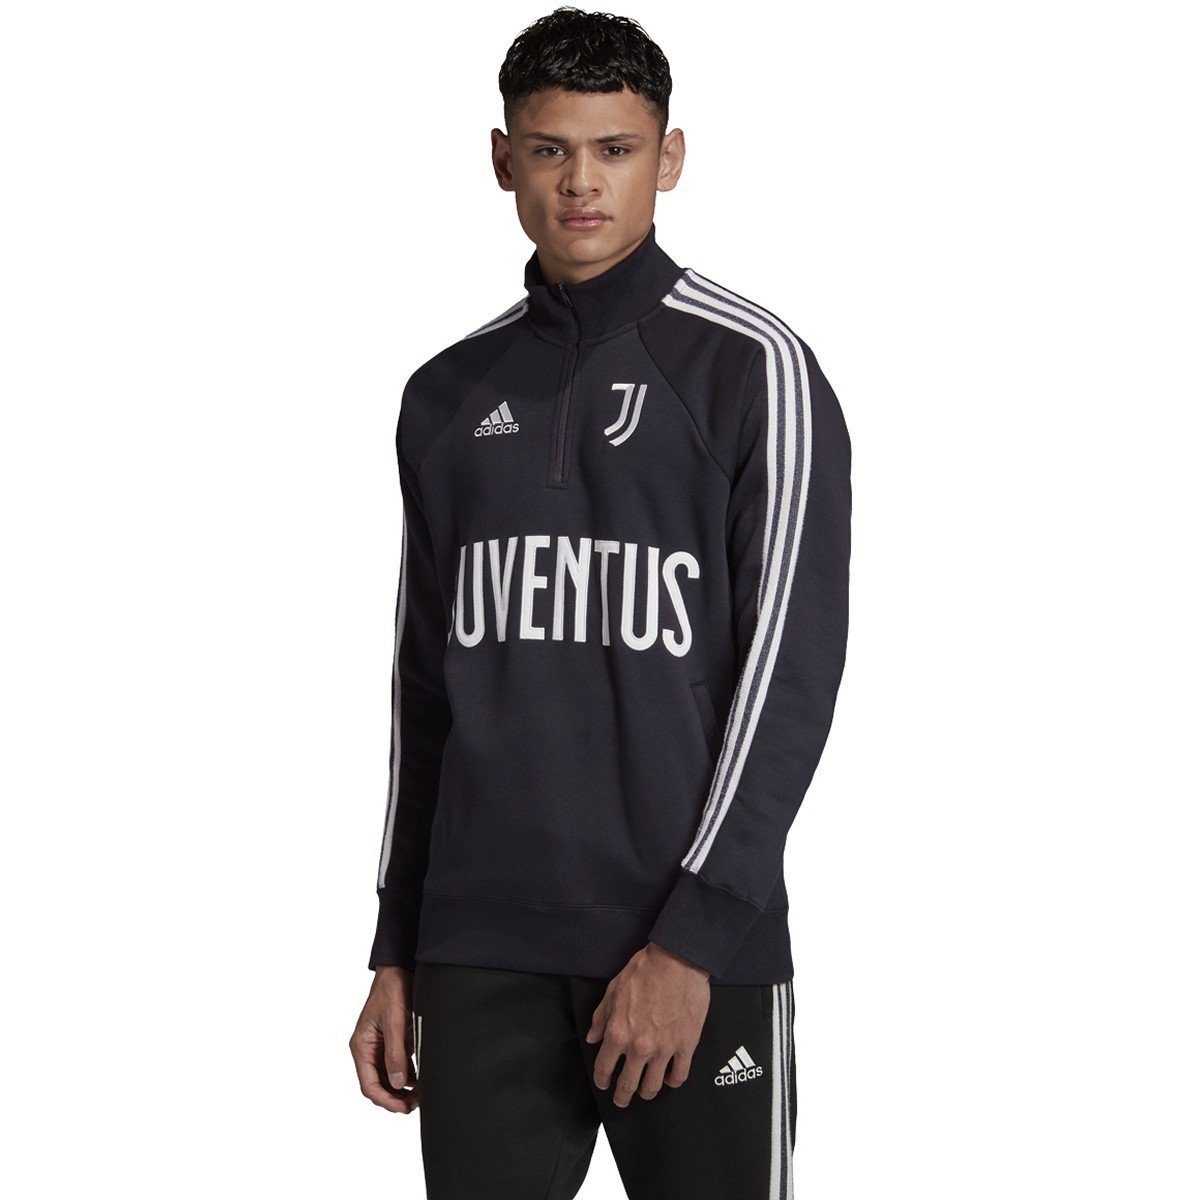 Men's Adidas Black Juventus Authentic Football Icon Goalkeeper Jersey